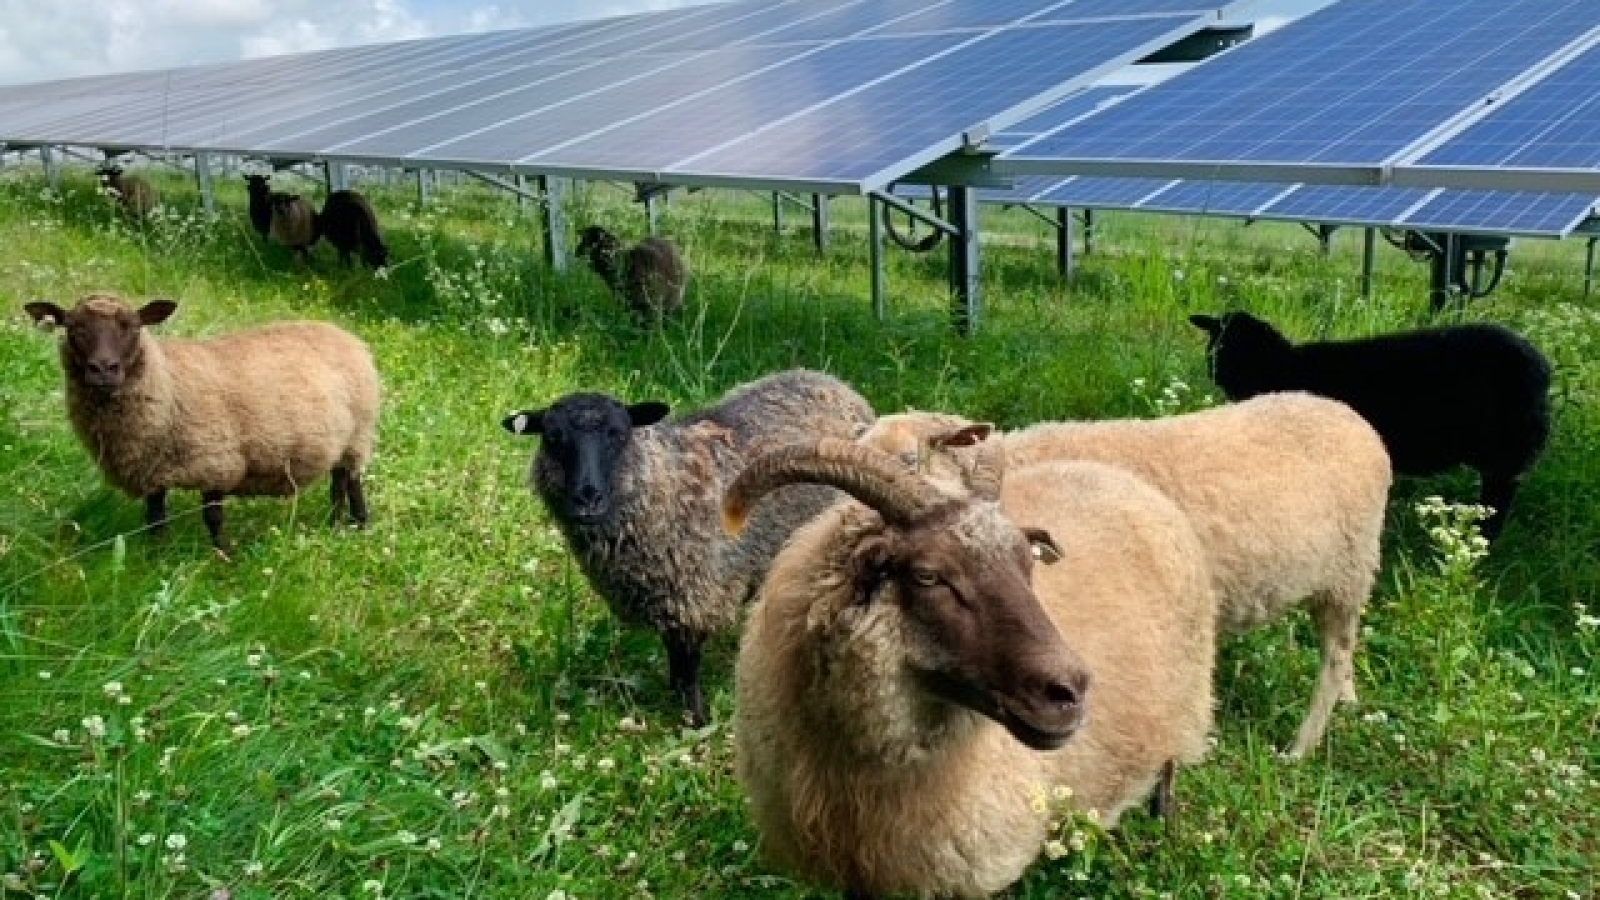 Sheep at the solar field